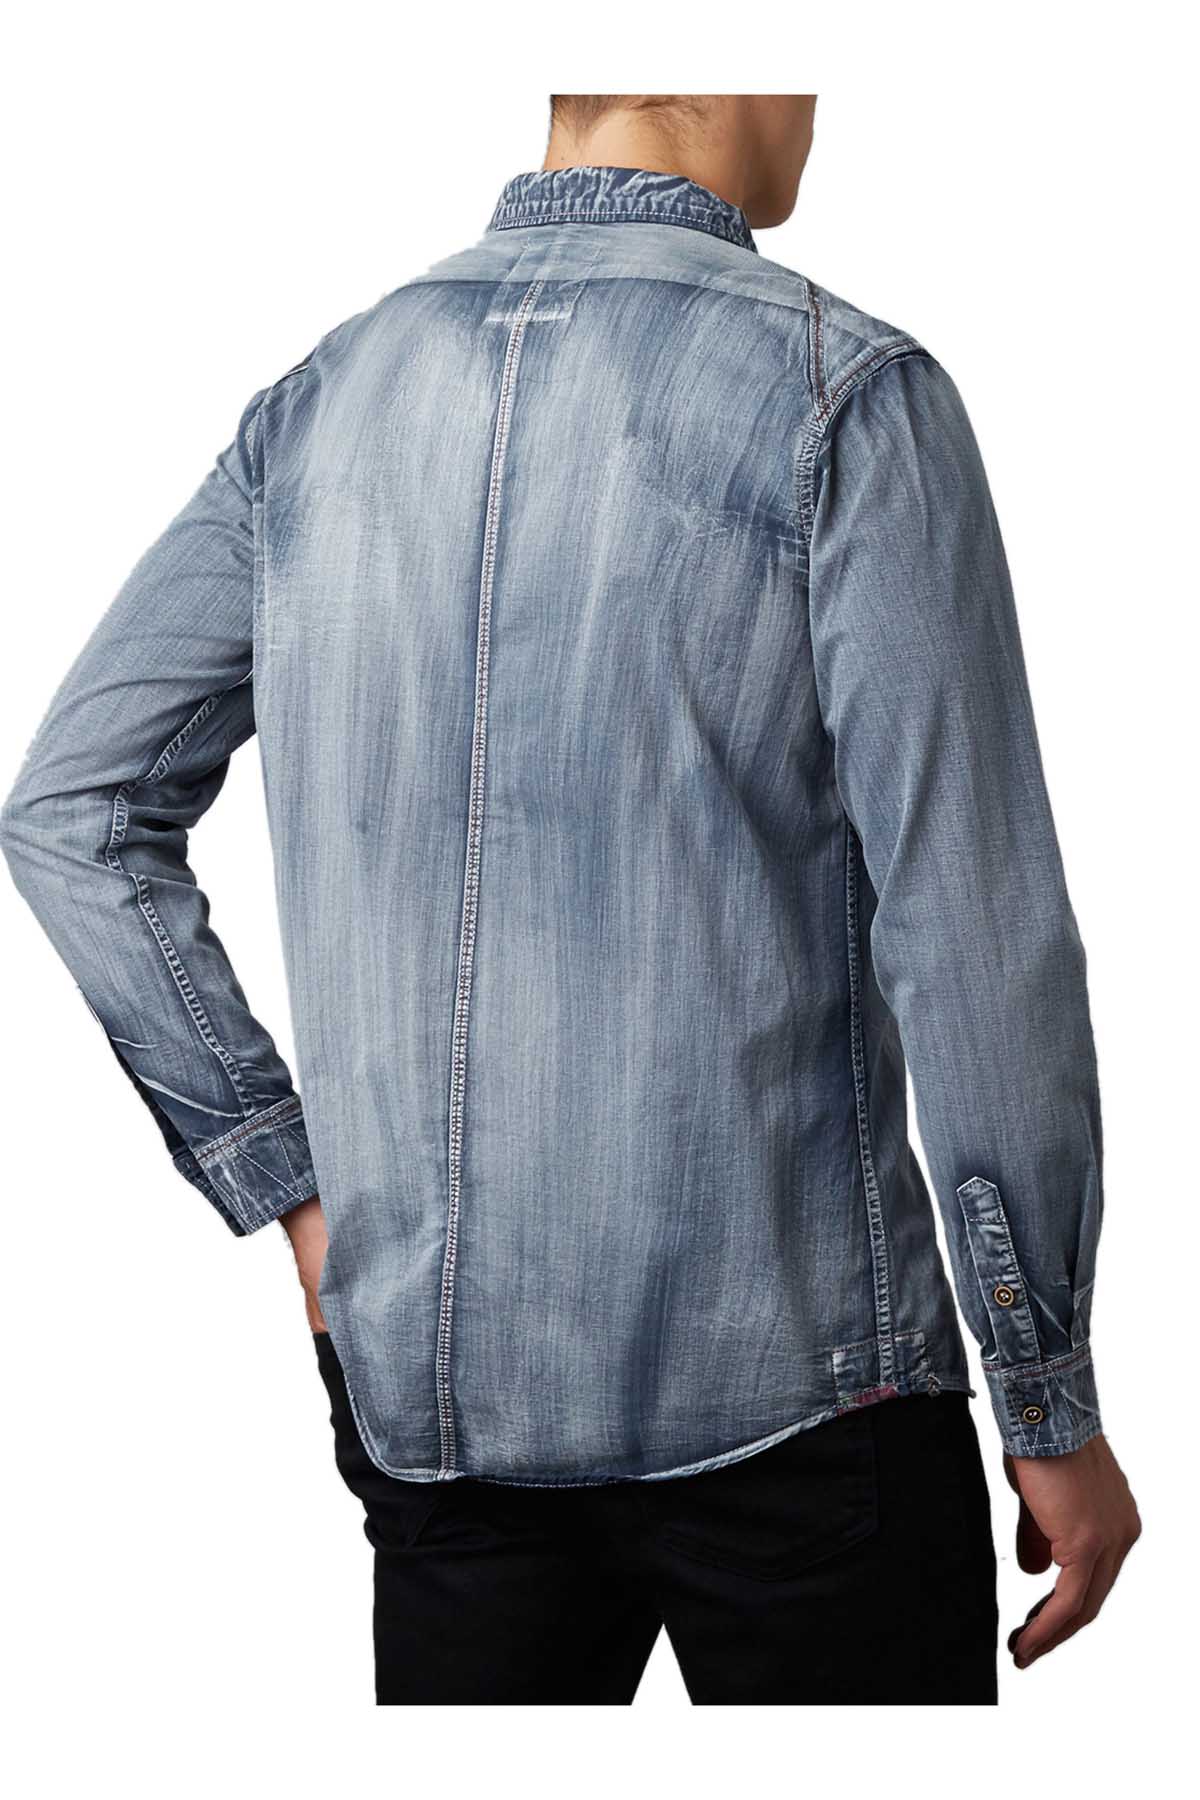 Tailored Recreation Premium Blue-Grey Corduroy Pocket Denim Button-Up Shirt